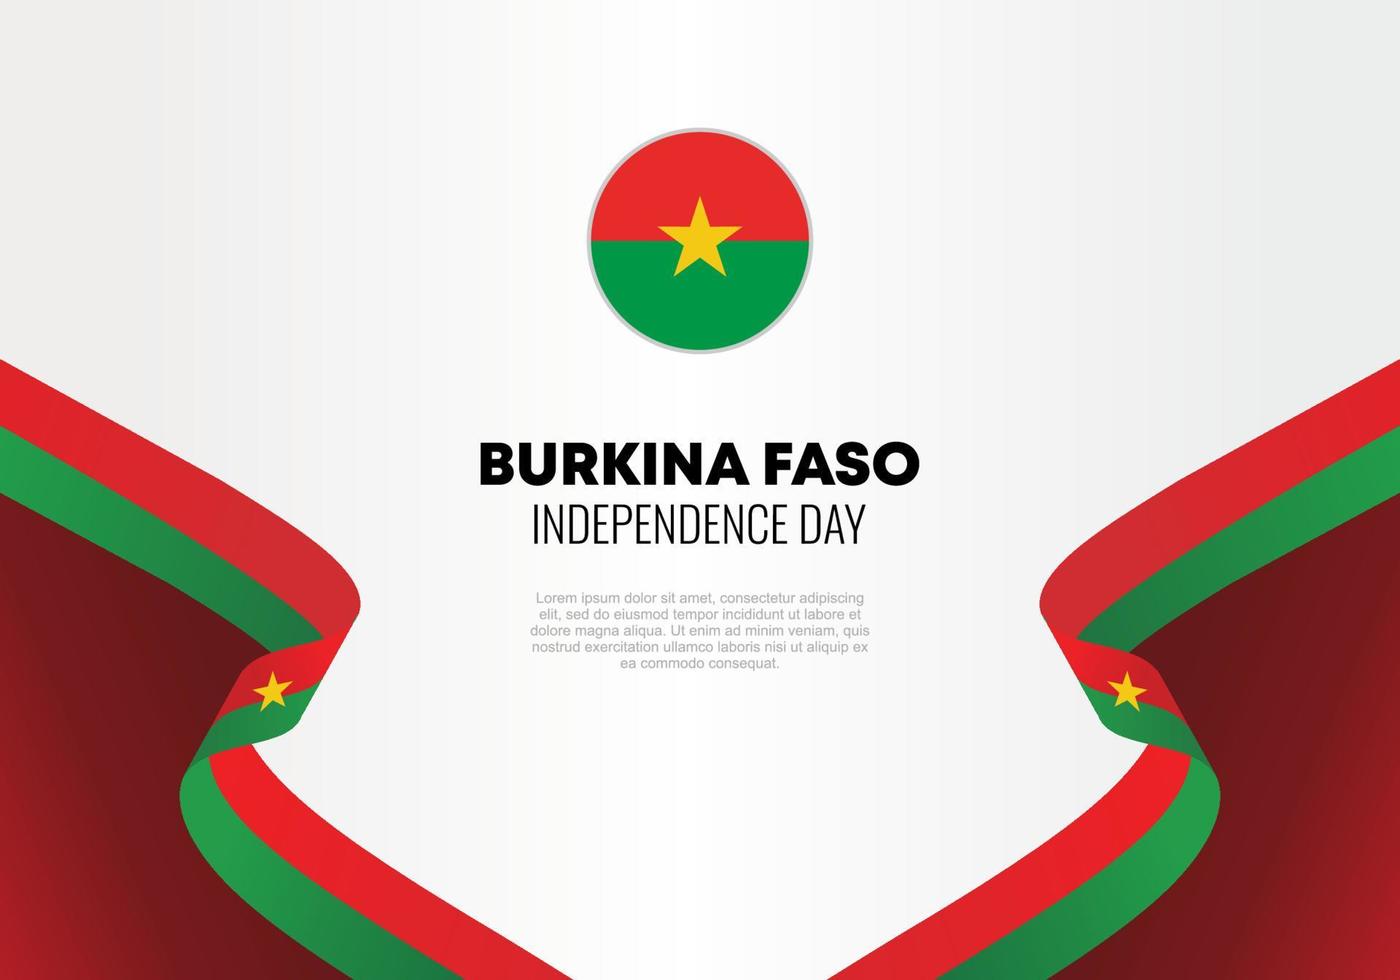 Burkina Faso independence day national celebration on August 5